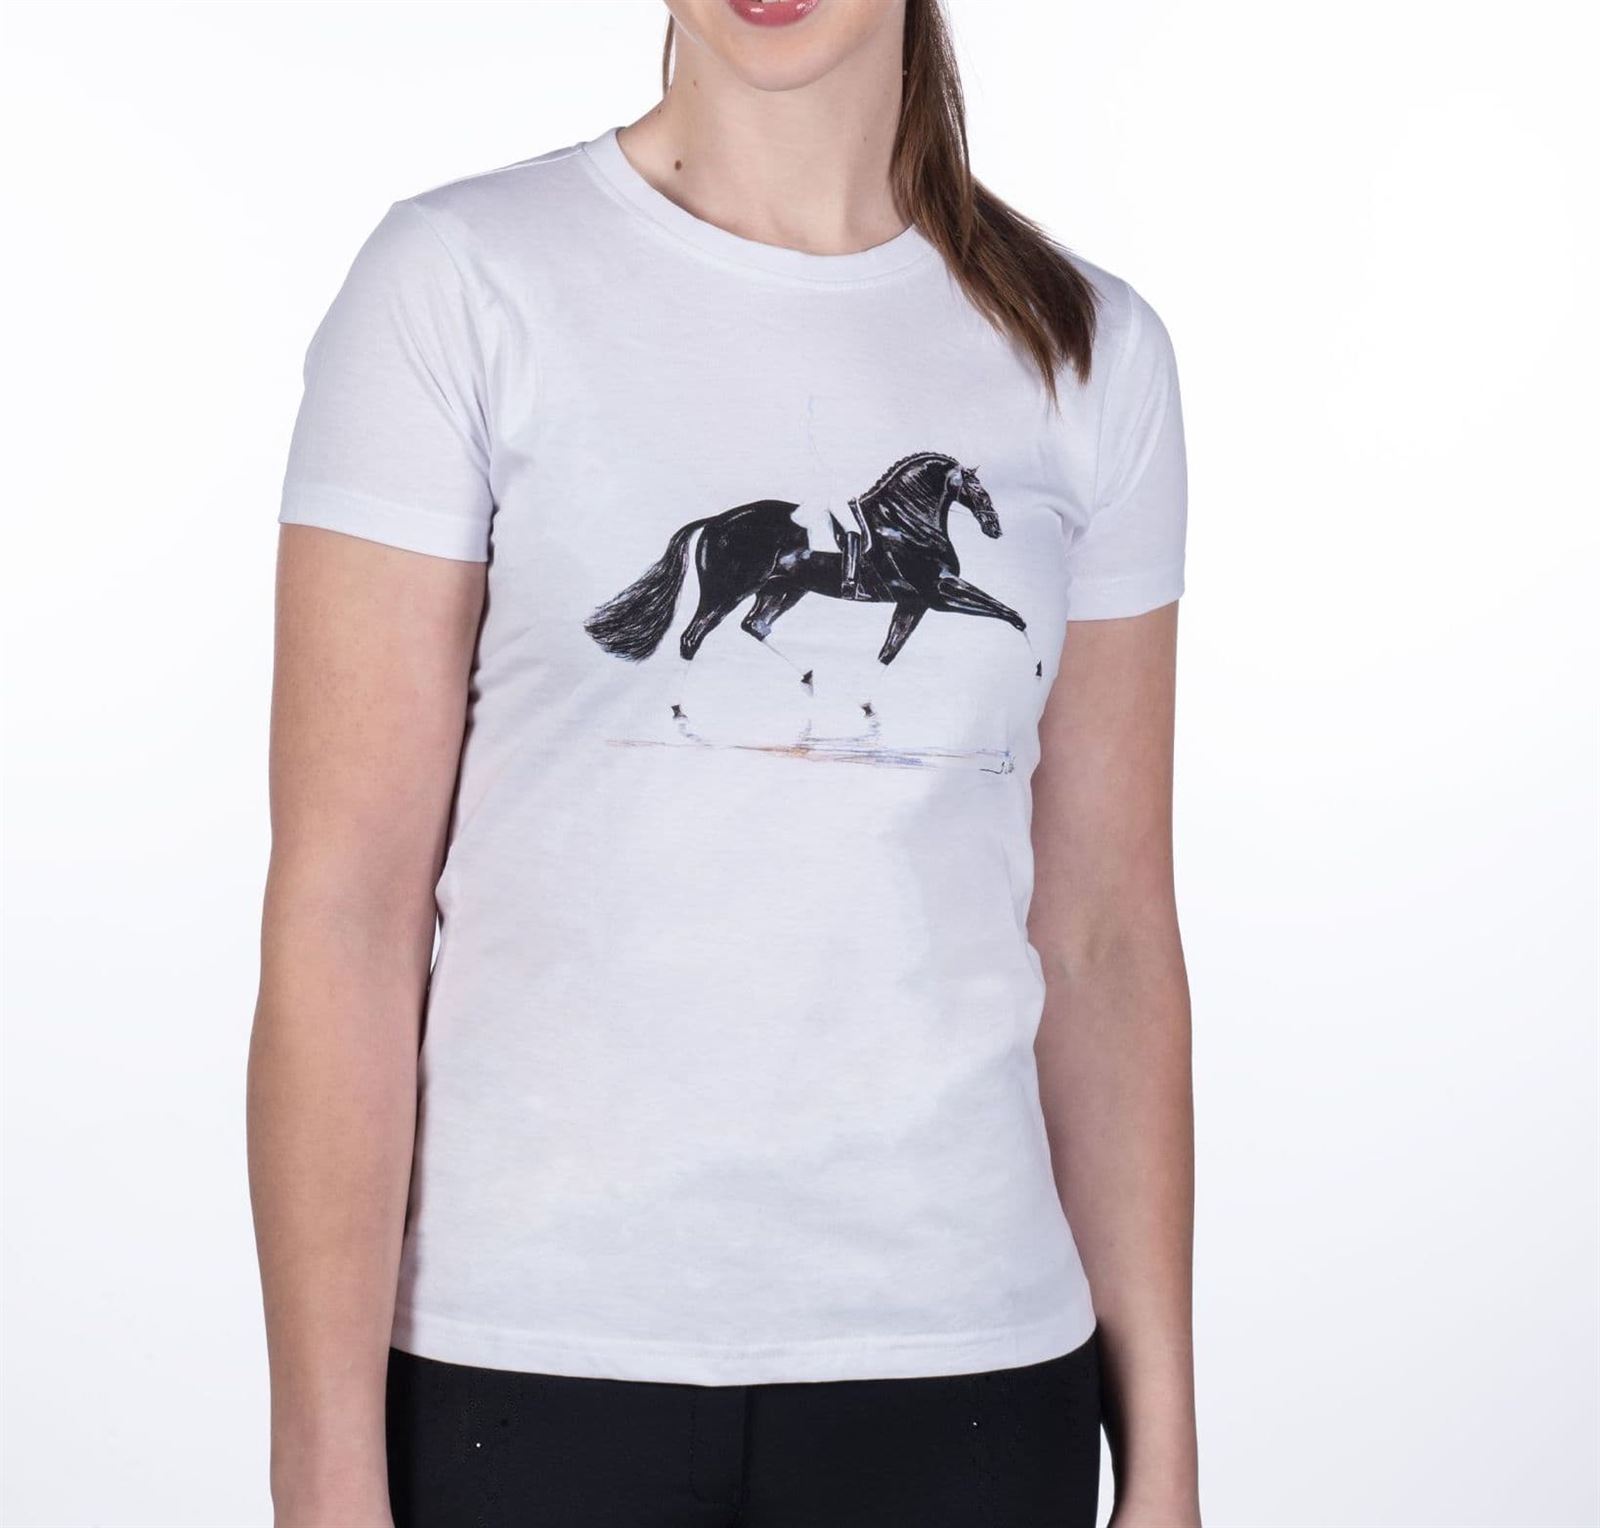 Camiseta HKM Sports Equipment caballo doma - Imagen 3